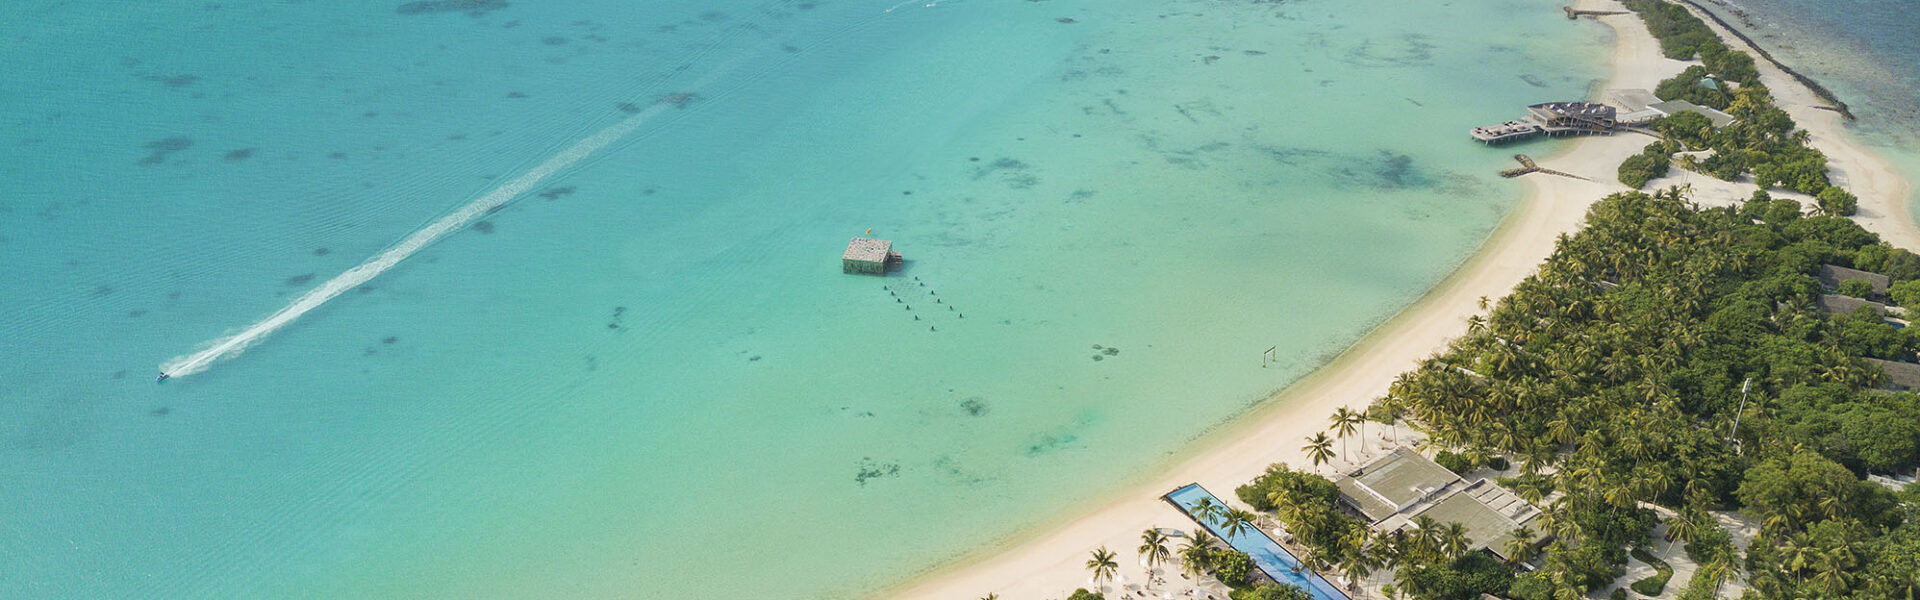 Fairmont Maldives Aerial View Water Villas